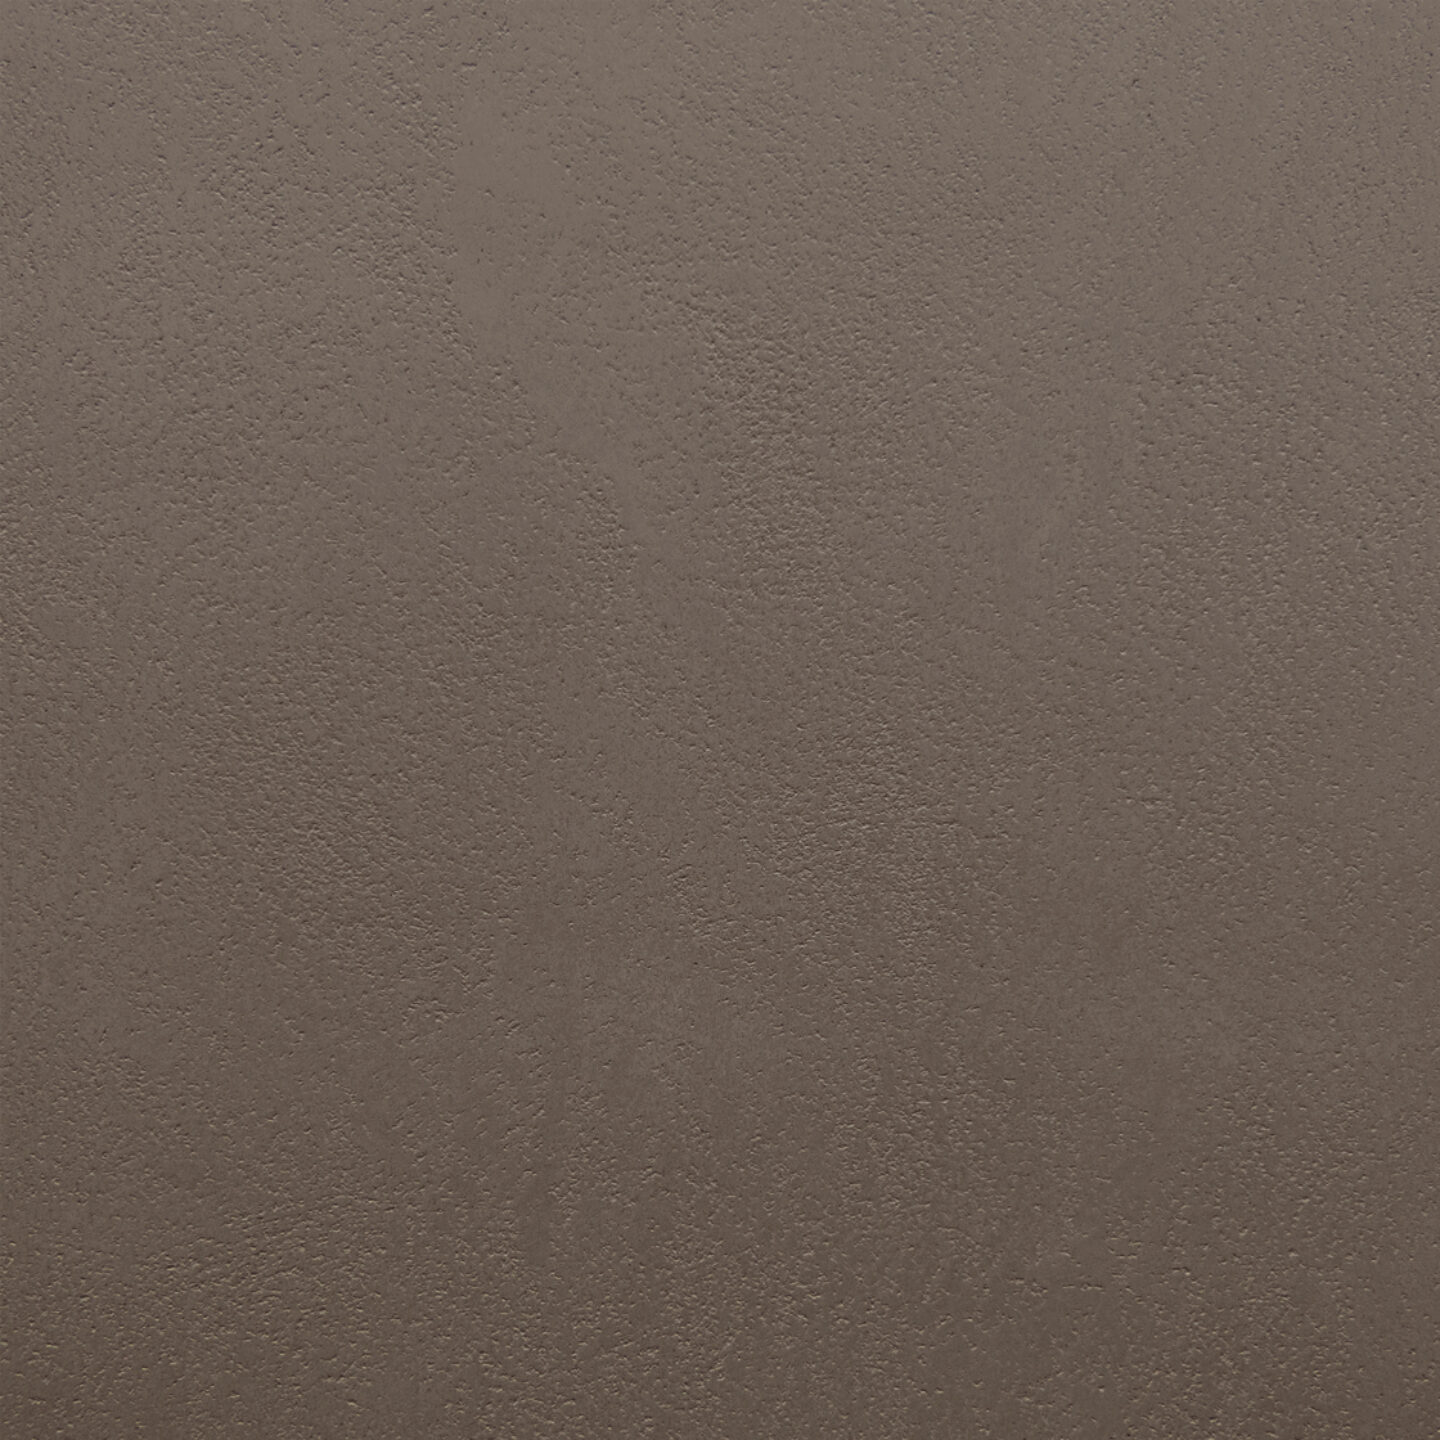 Close up of Armourcoat leatherstone exterior polished plaster finish - 36